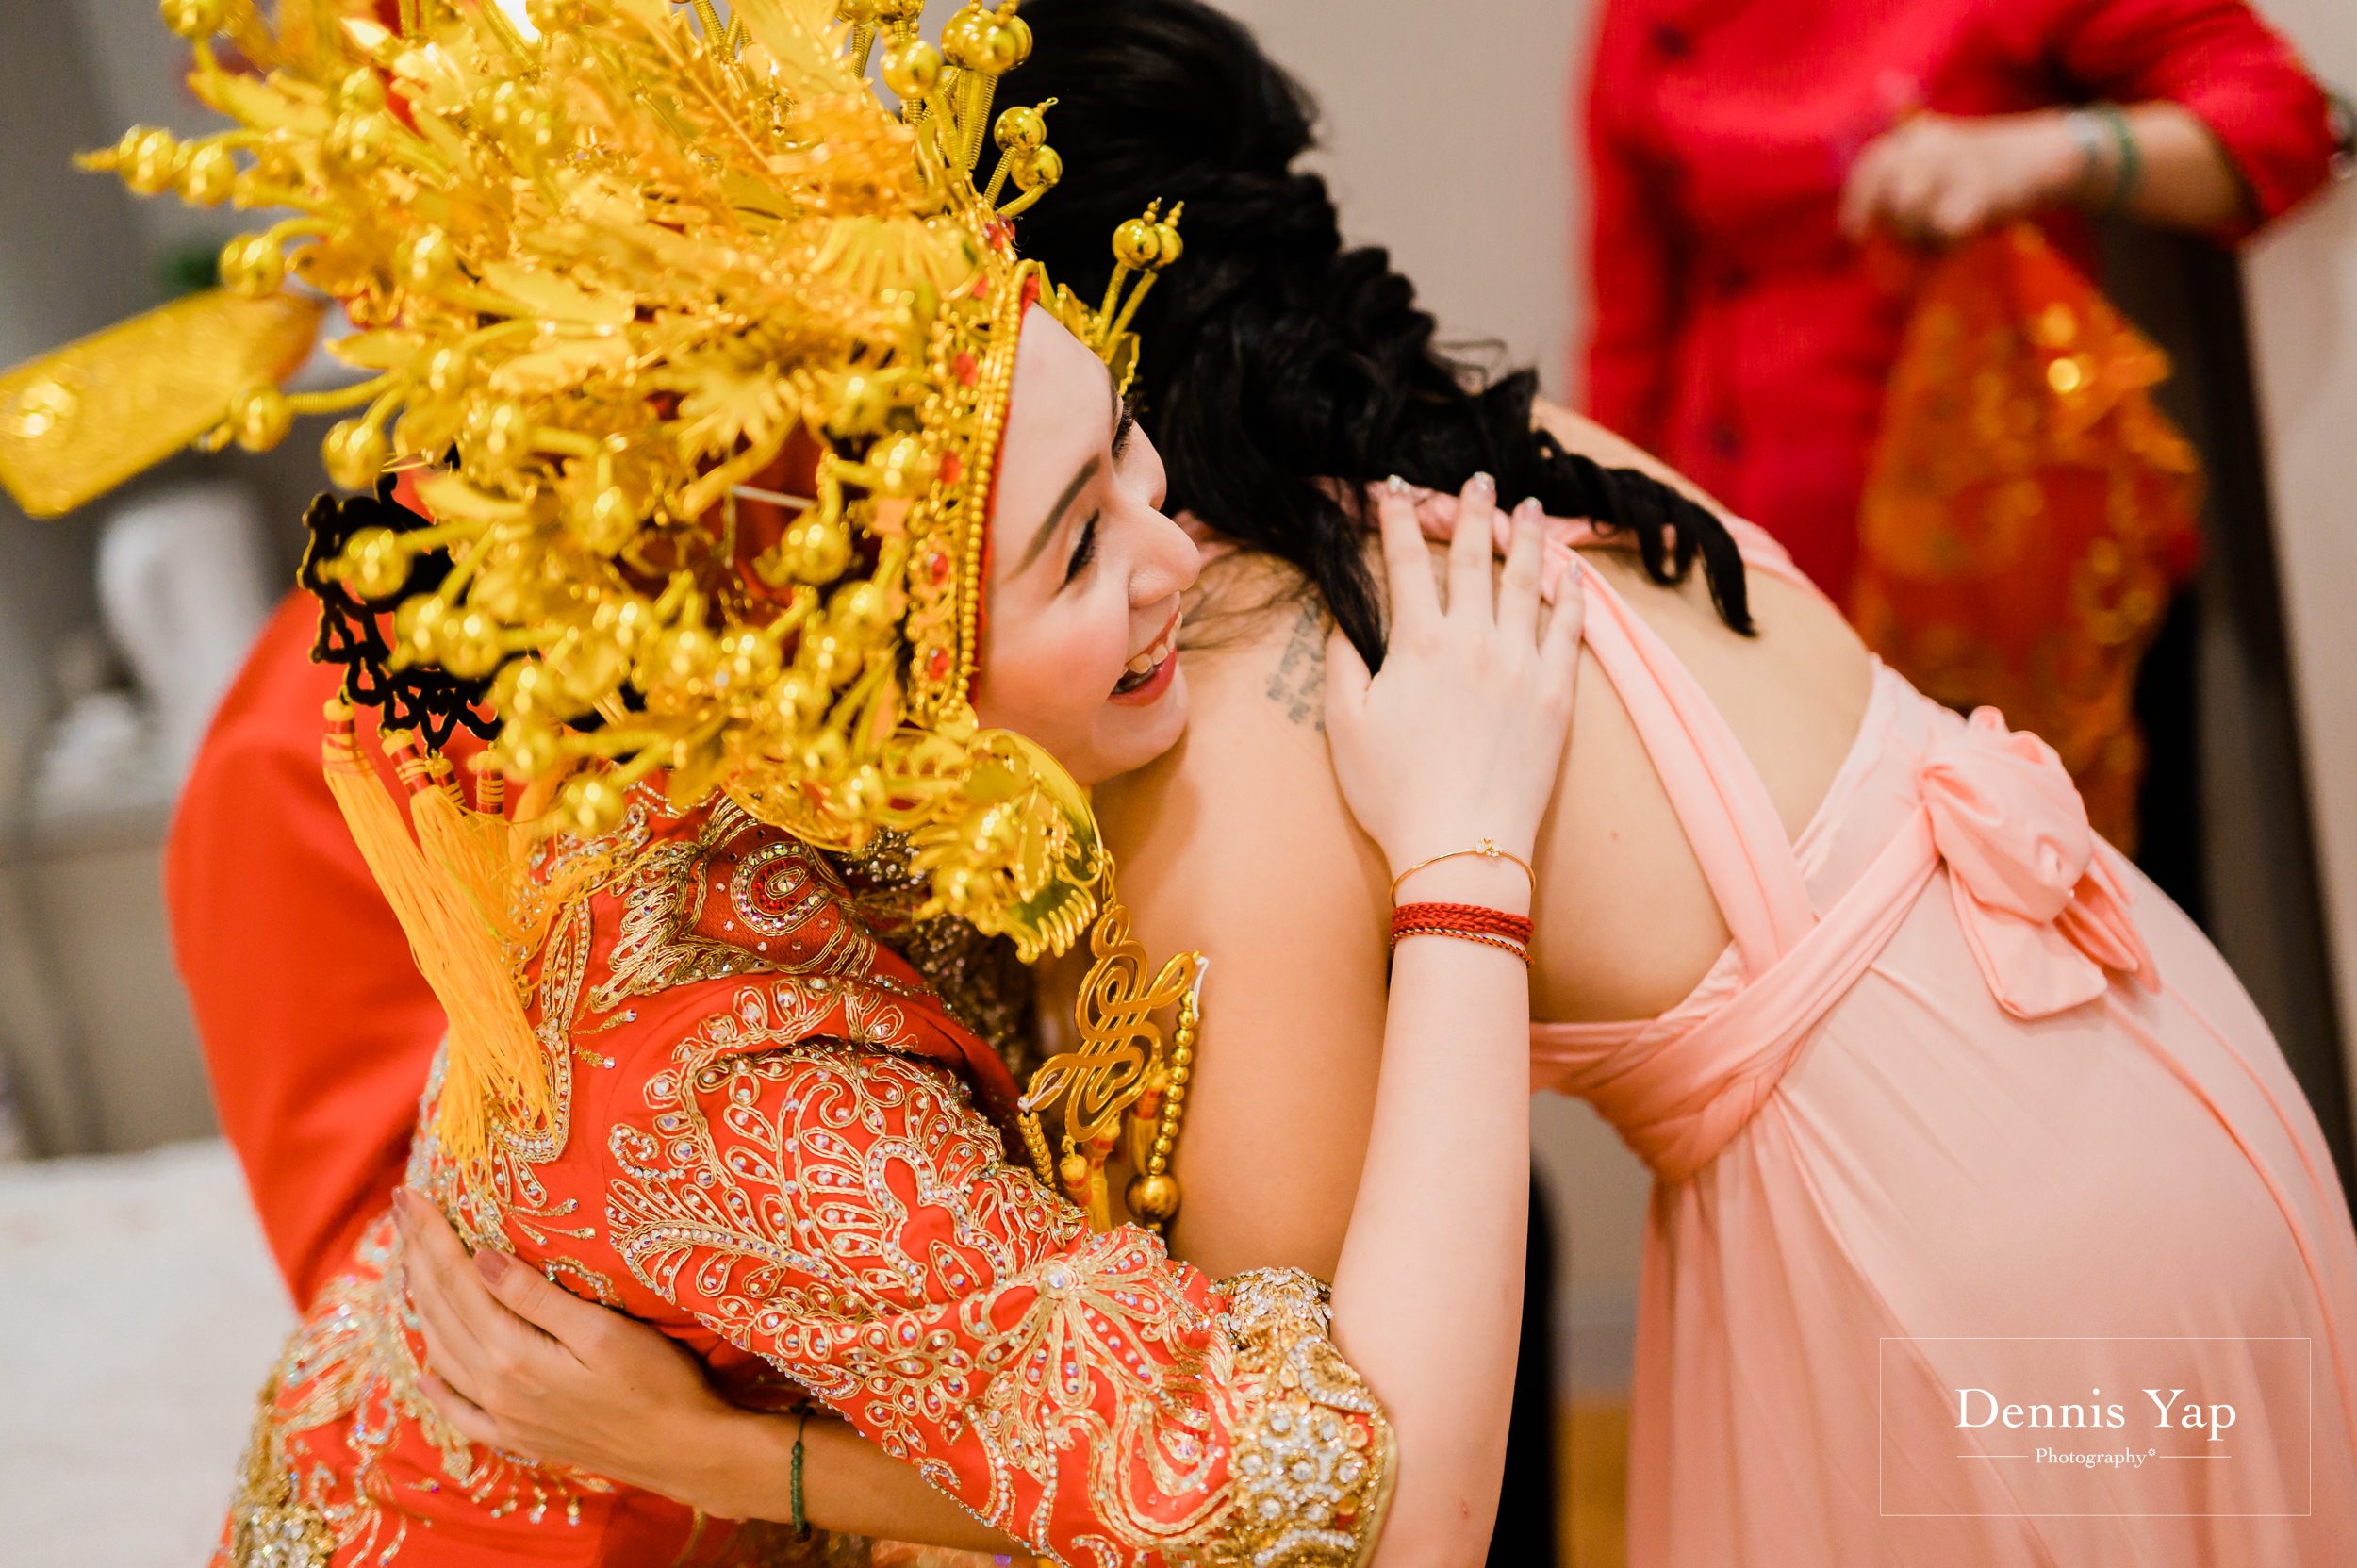 chen tze yek kuan morning tea ceremony wedding red gold dennis yap photography GIS-19.jpg